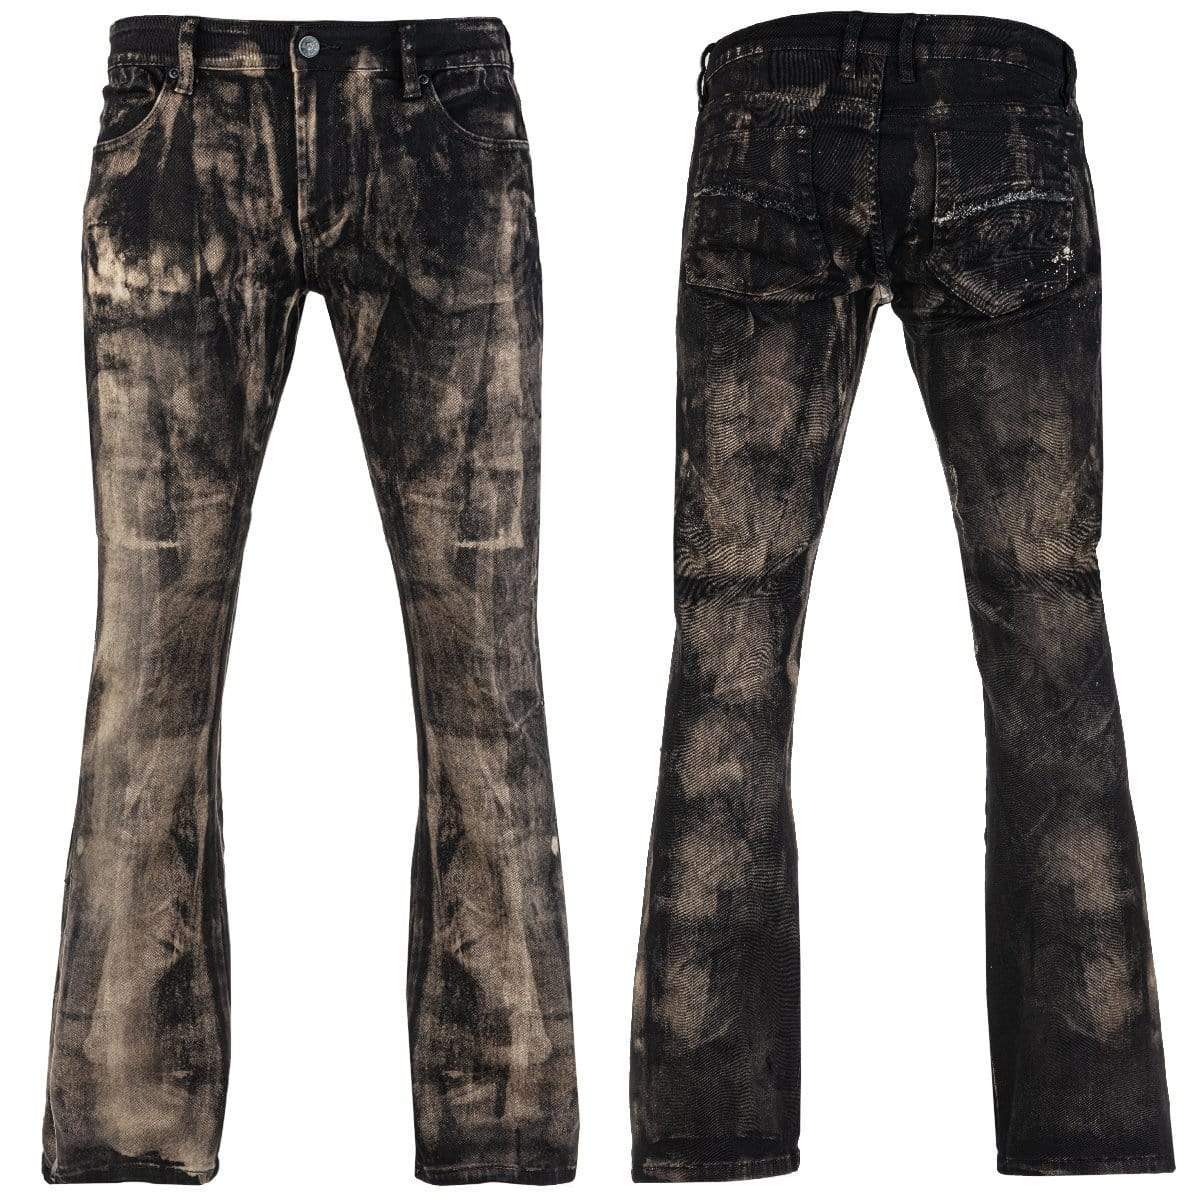 Wornstar Clothing mens custom pants. Handmade custom rock pants. Rocker style black stretch denim custom made stage pants.